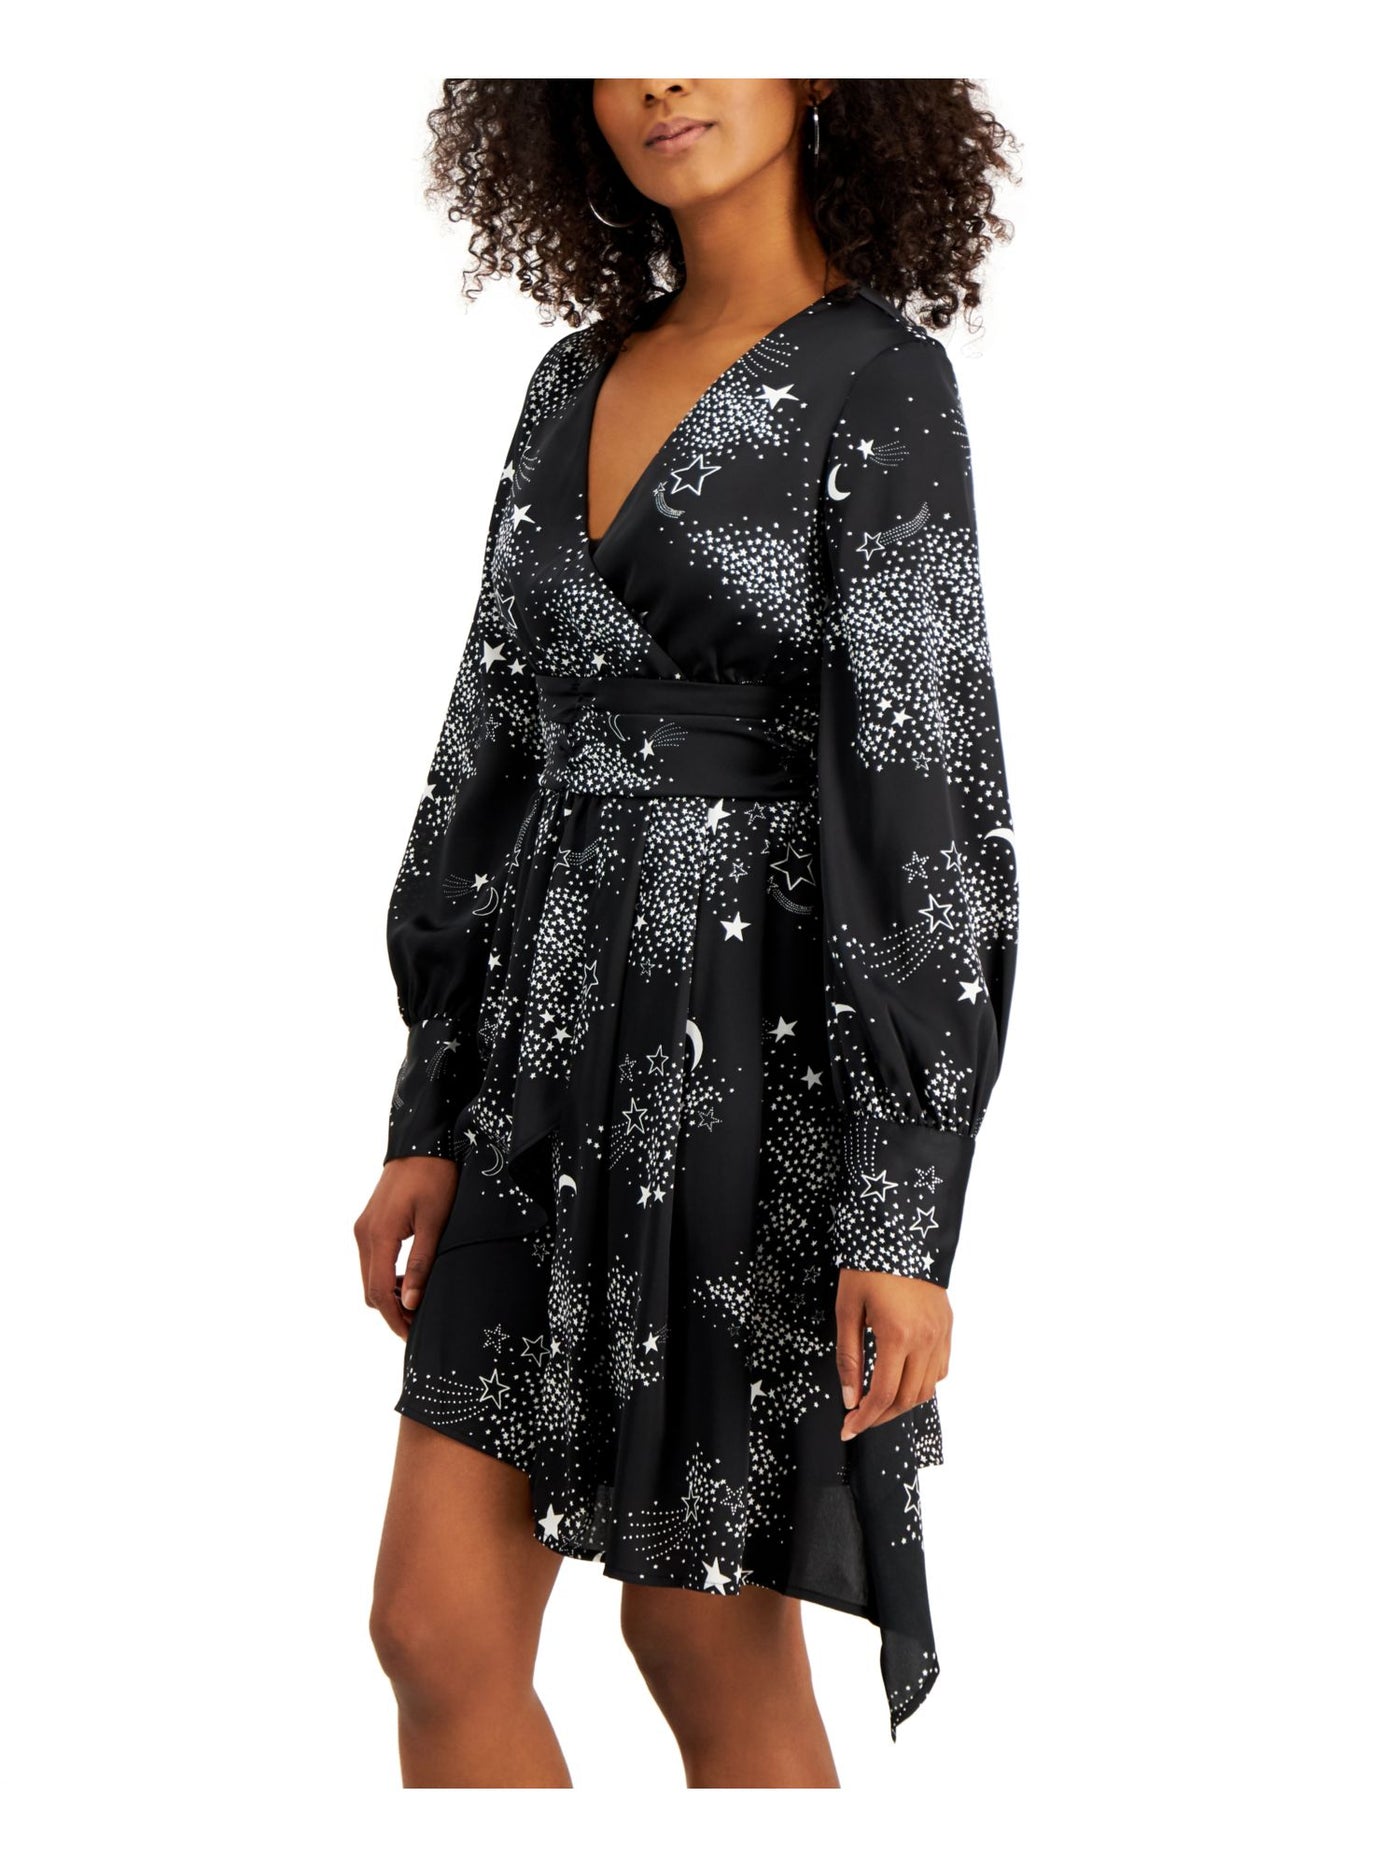 BAR III Womens Black Moon And Stars Printed Long Sleeve Surplice Neckline Short Party Faux Wrap Dress 14